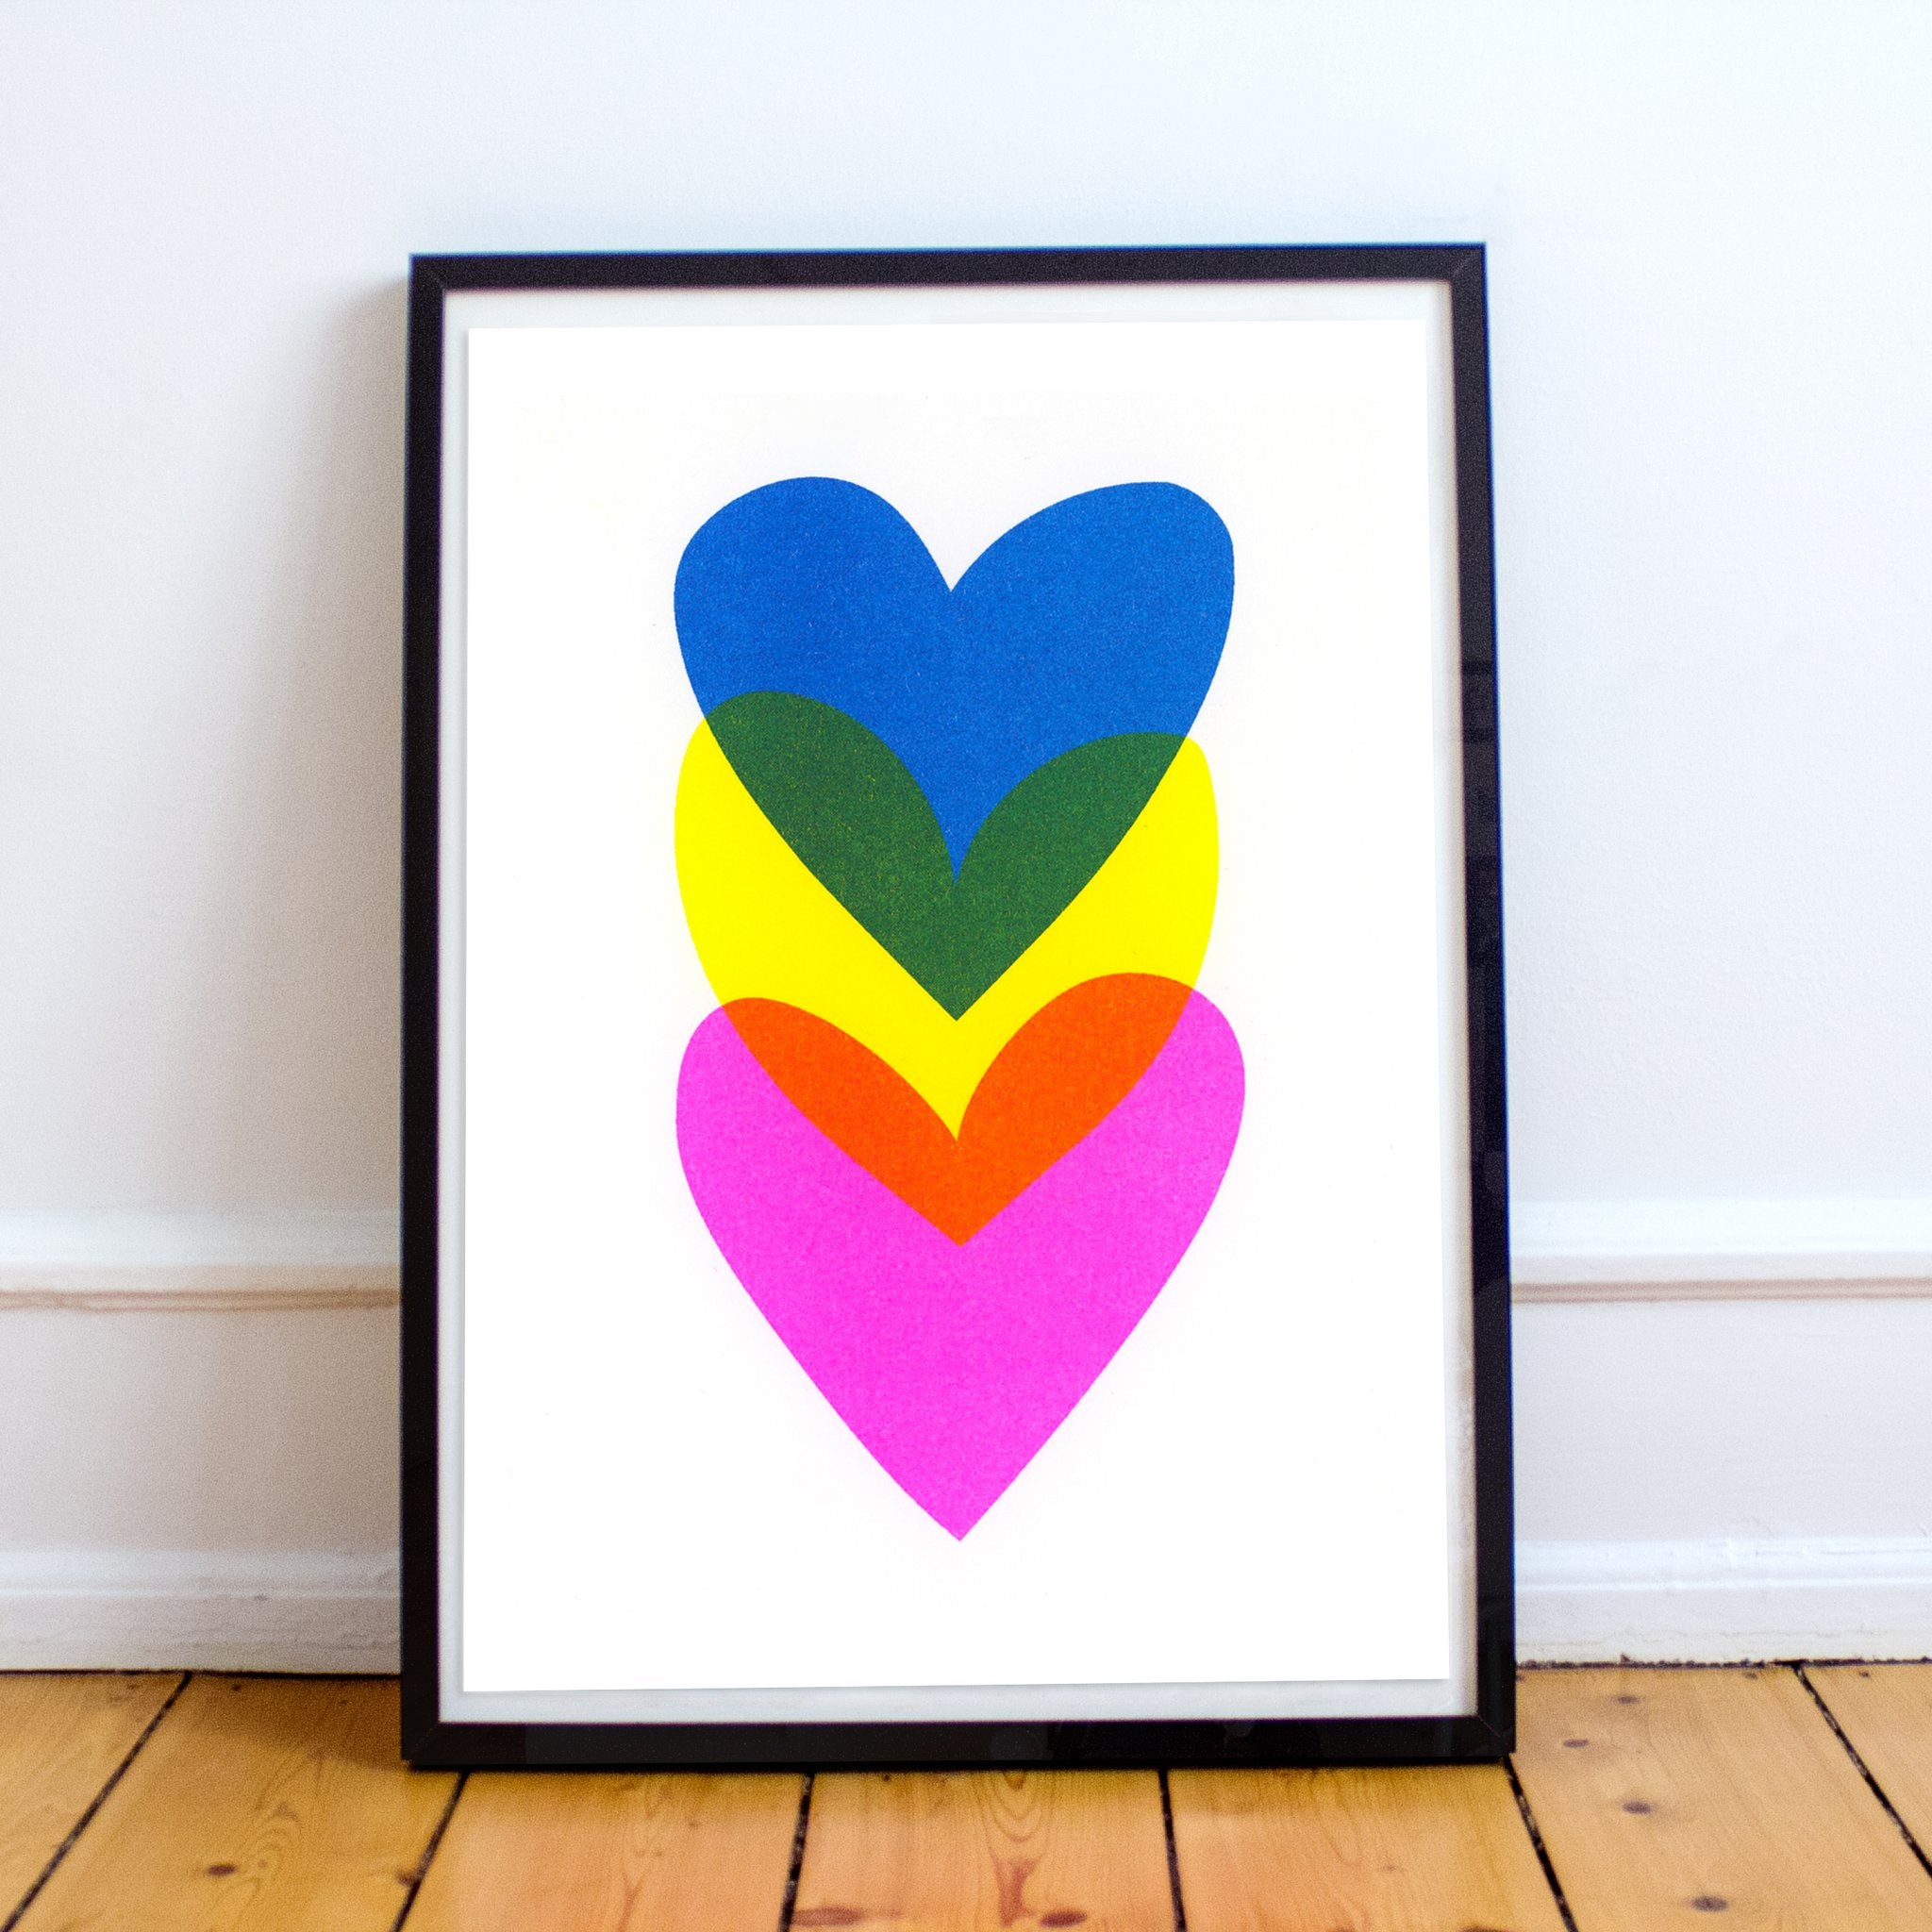 Artprint Poster Hearts